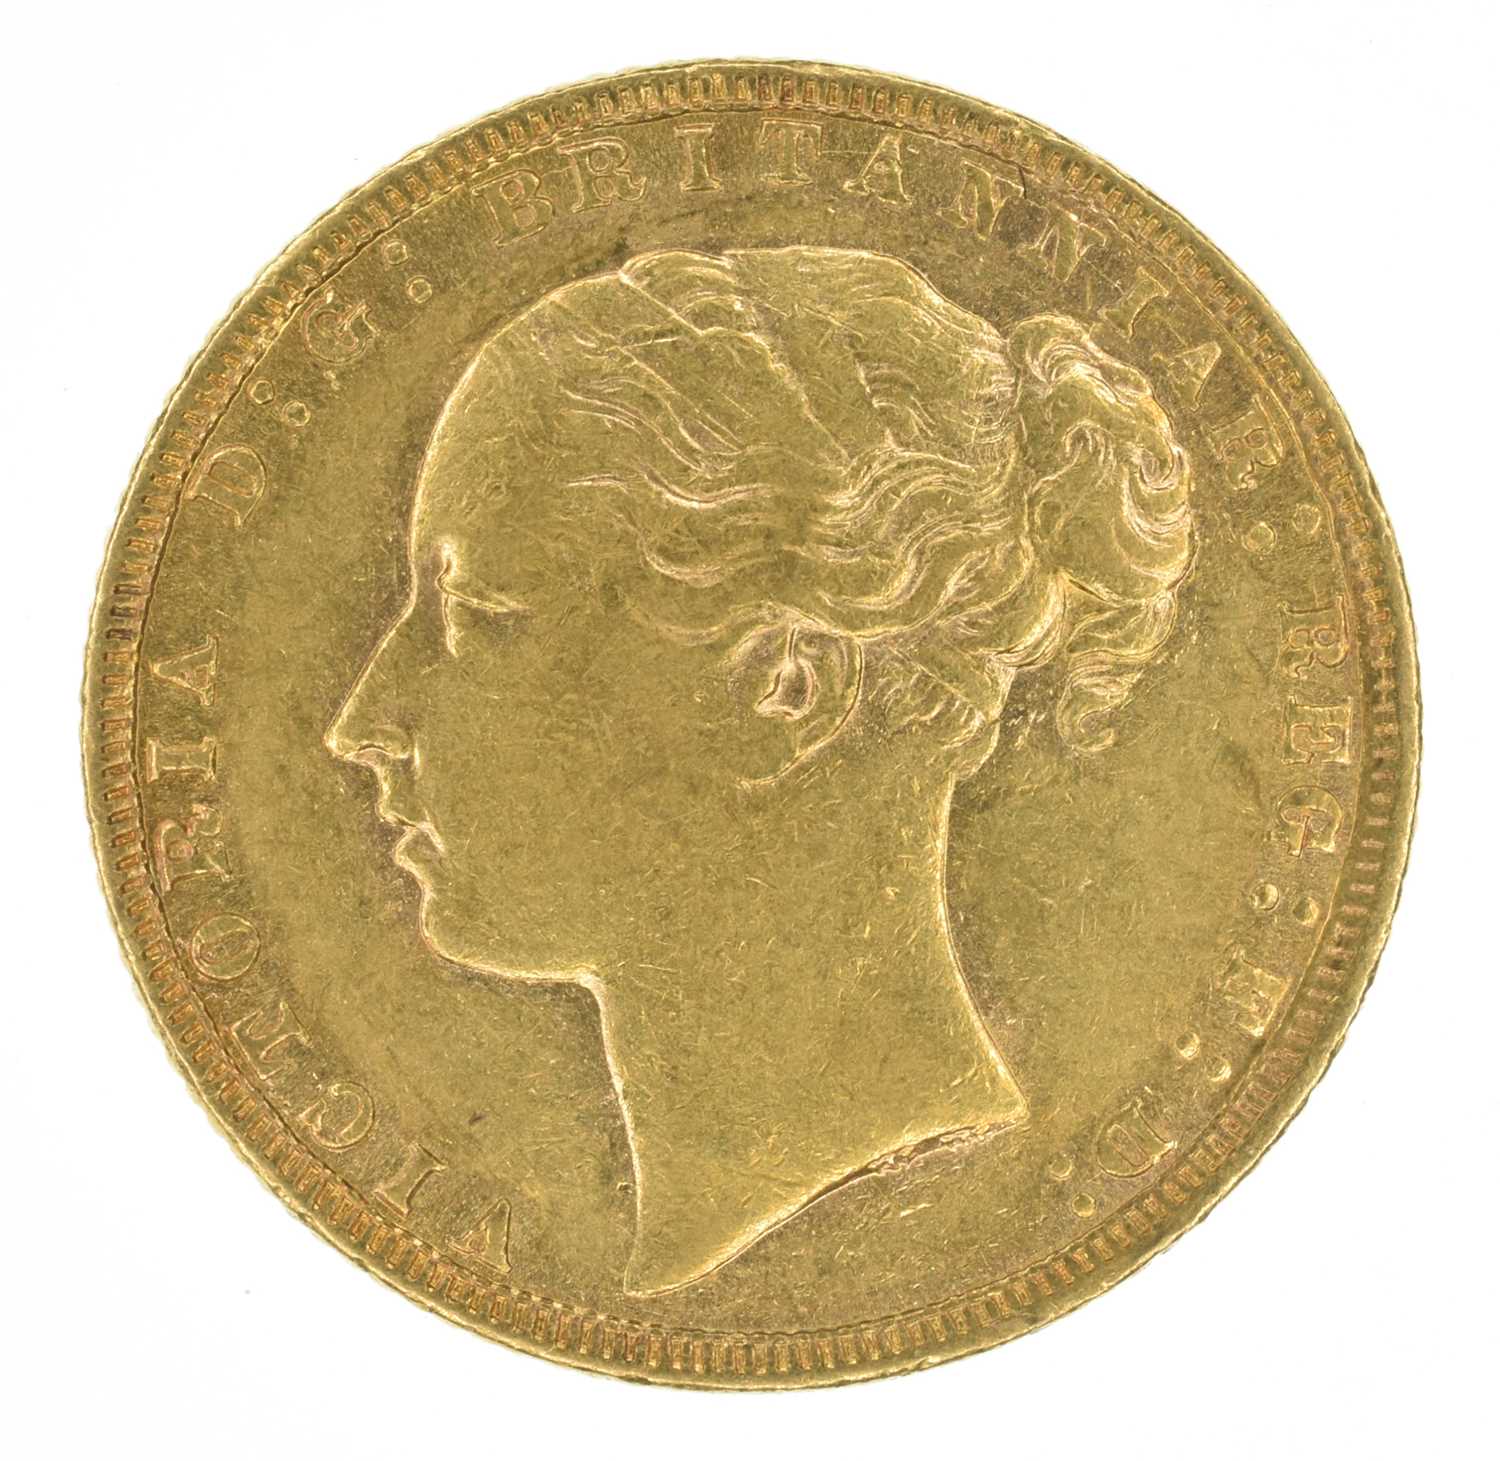 Lot 88 - Queen Victoria, Sovereign, 1872, VF.